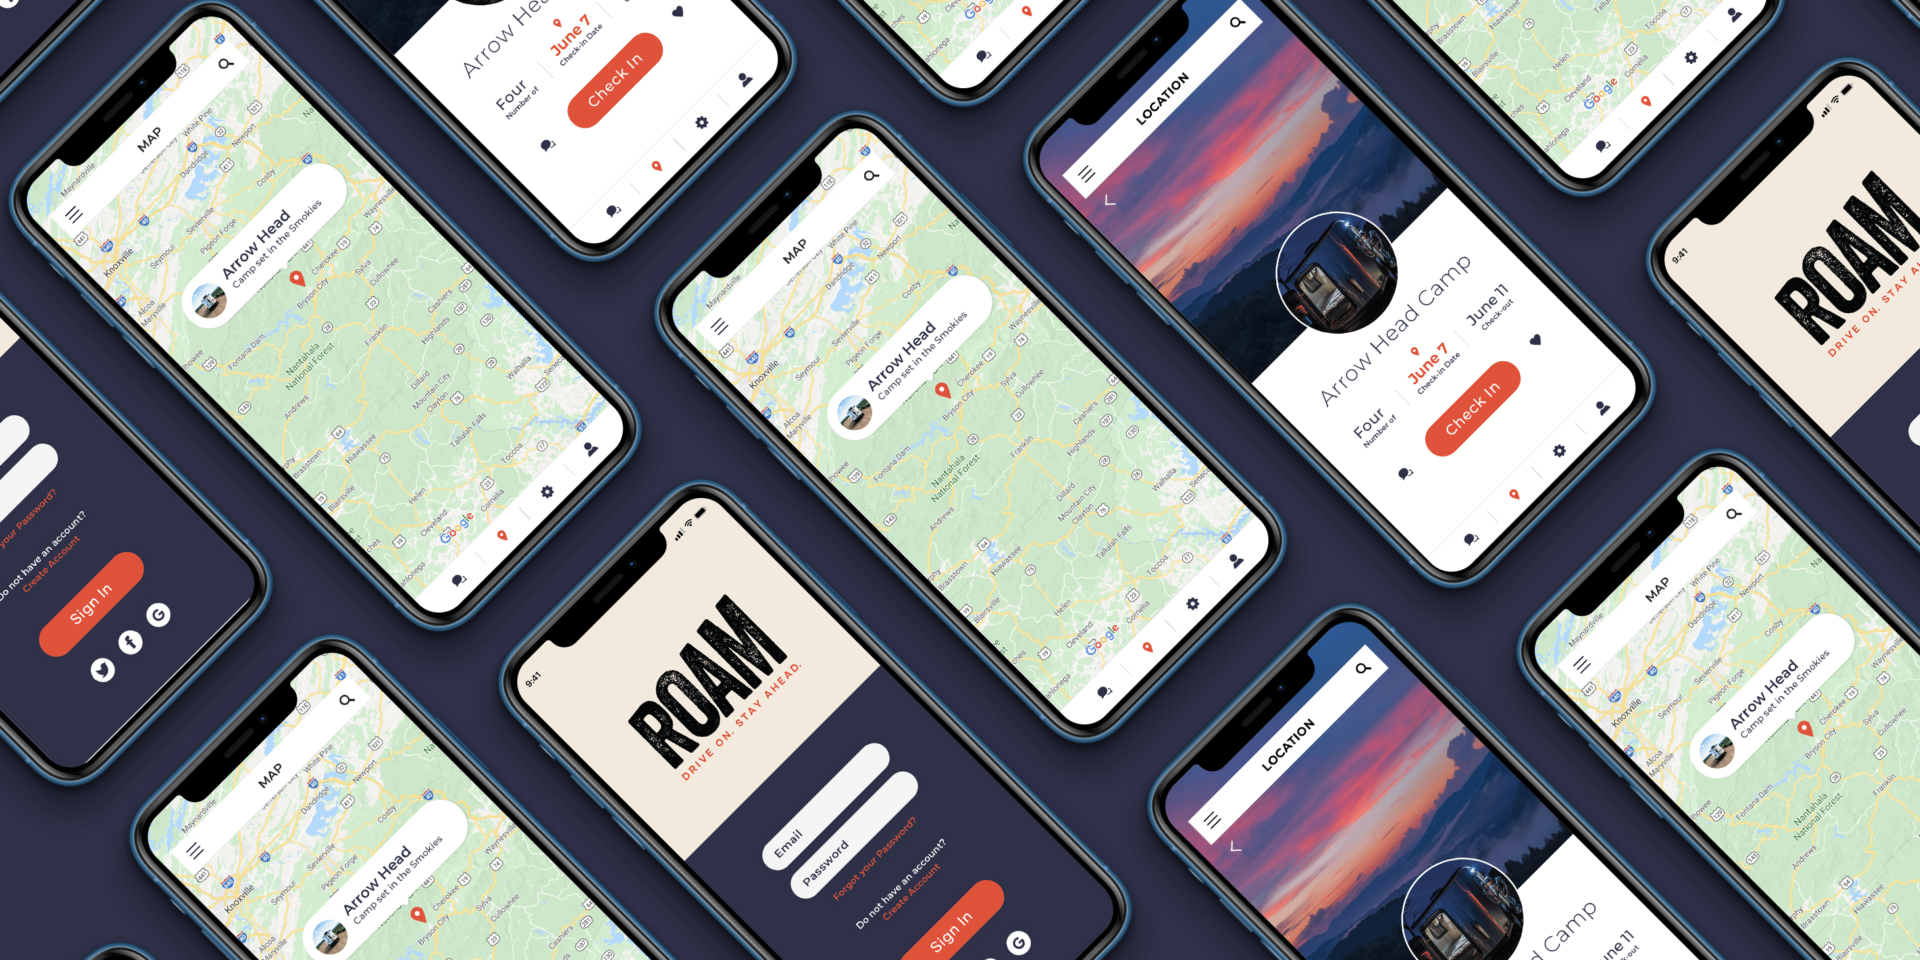 ROAM software product screenshots on mobile phones